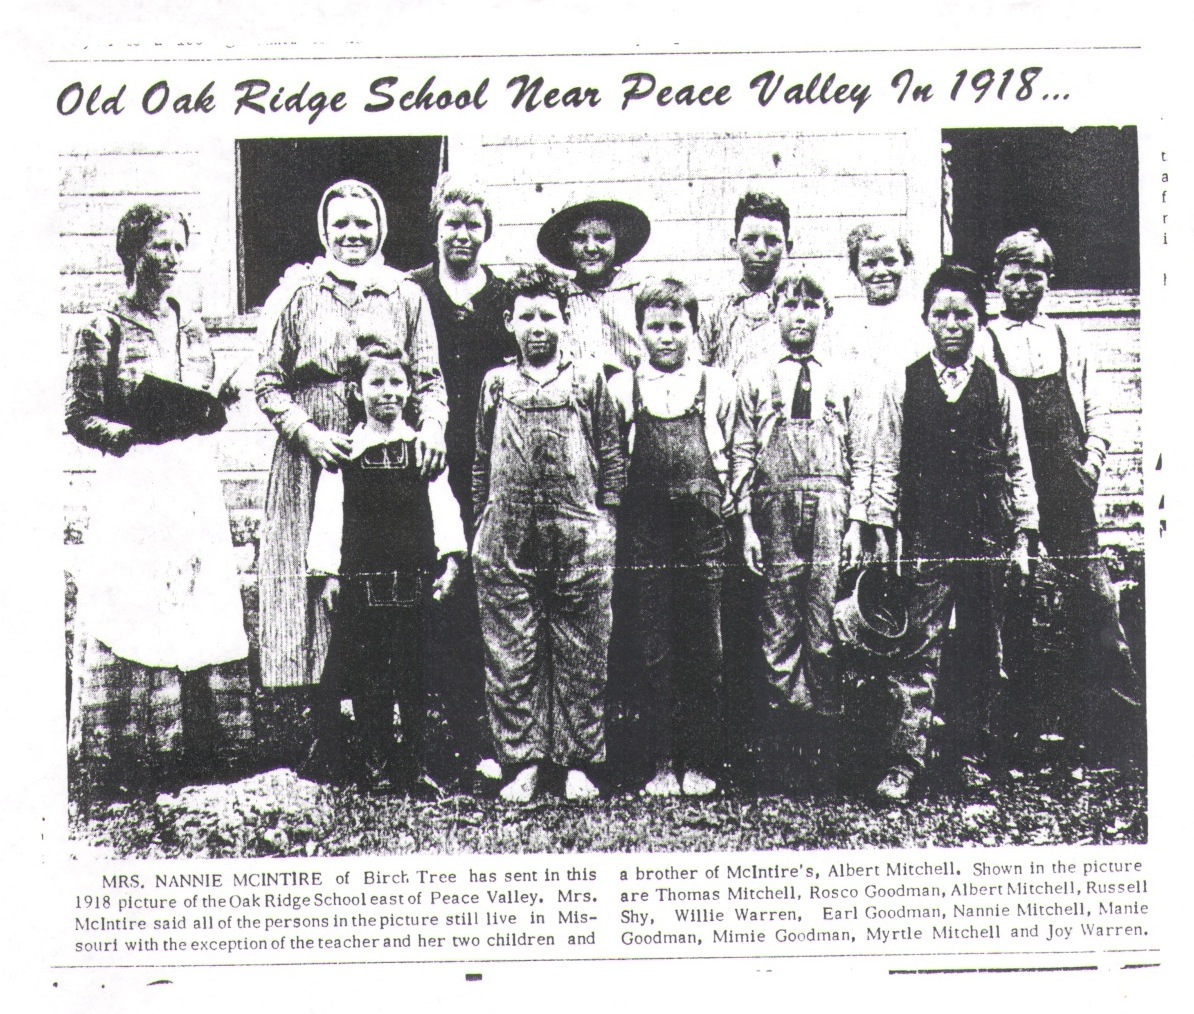 Della E. (Walker) Warren, 1918 newspaper article and photo, Oak Ridge School, Peace Valley, Howell County, Missouri